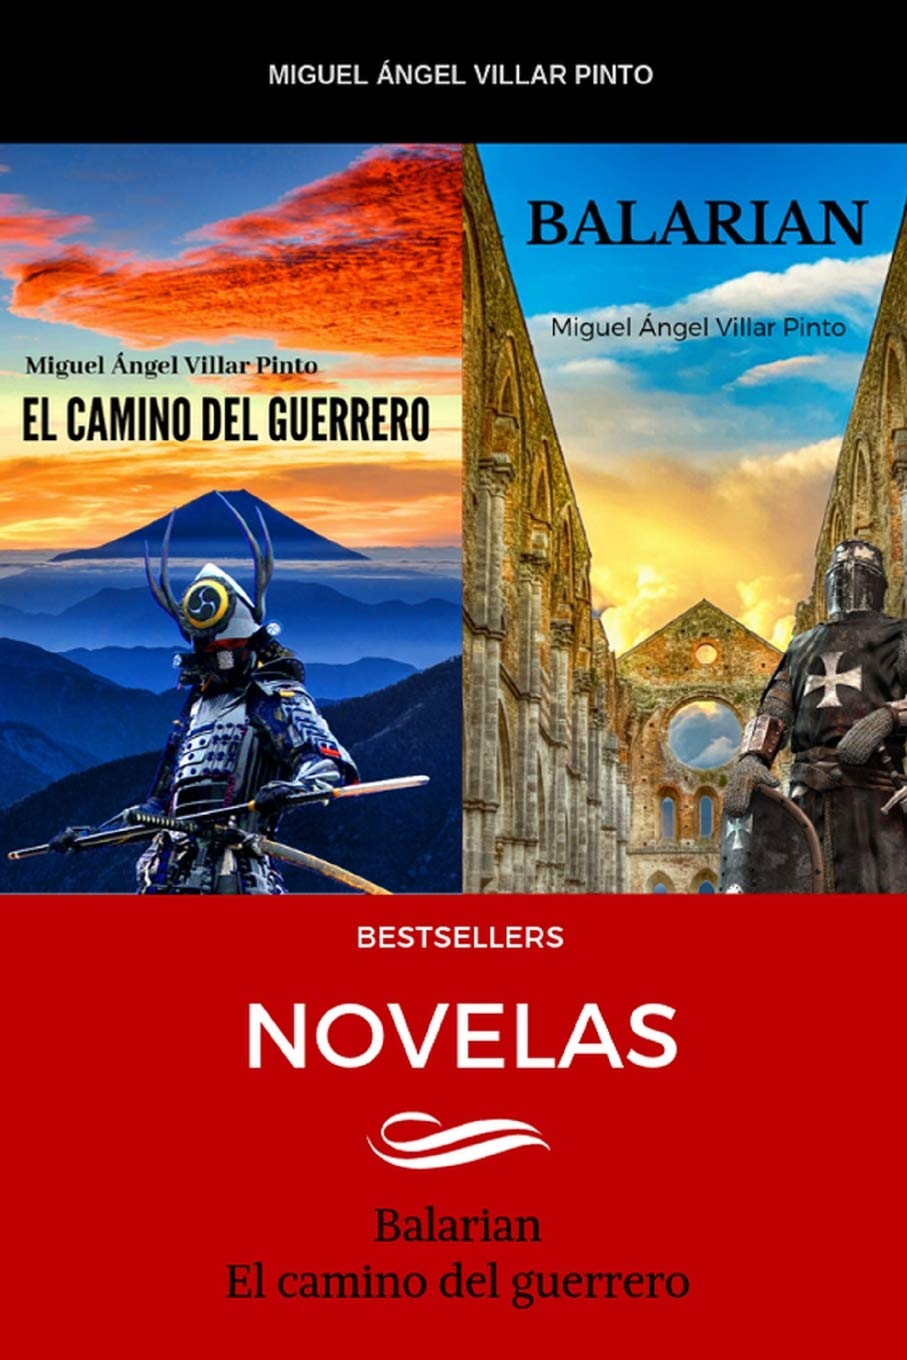 Bestsellers: Novelas (Spanish Edition)